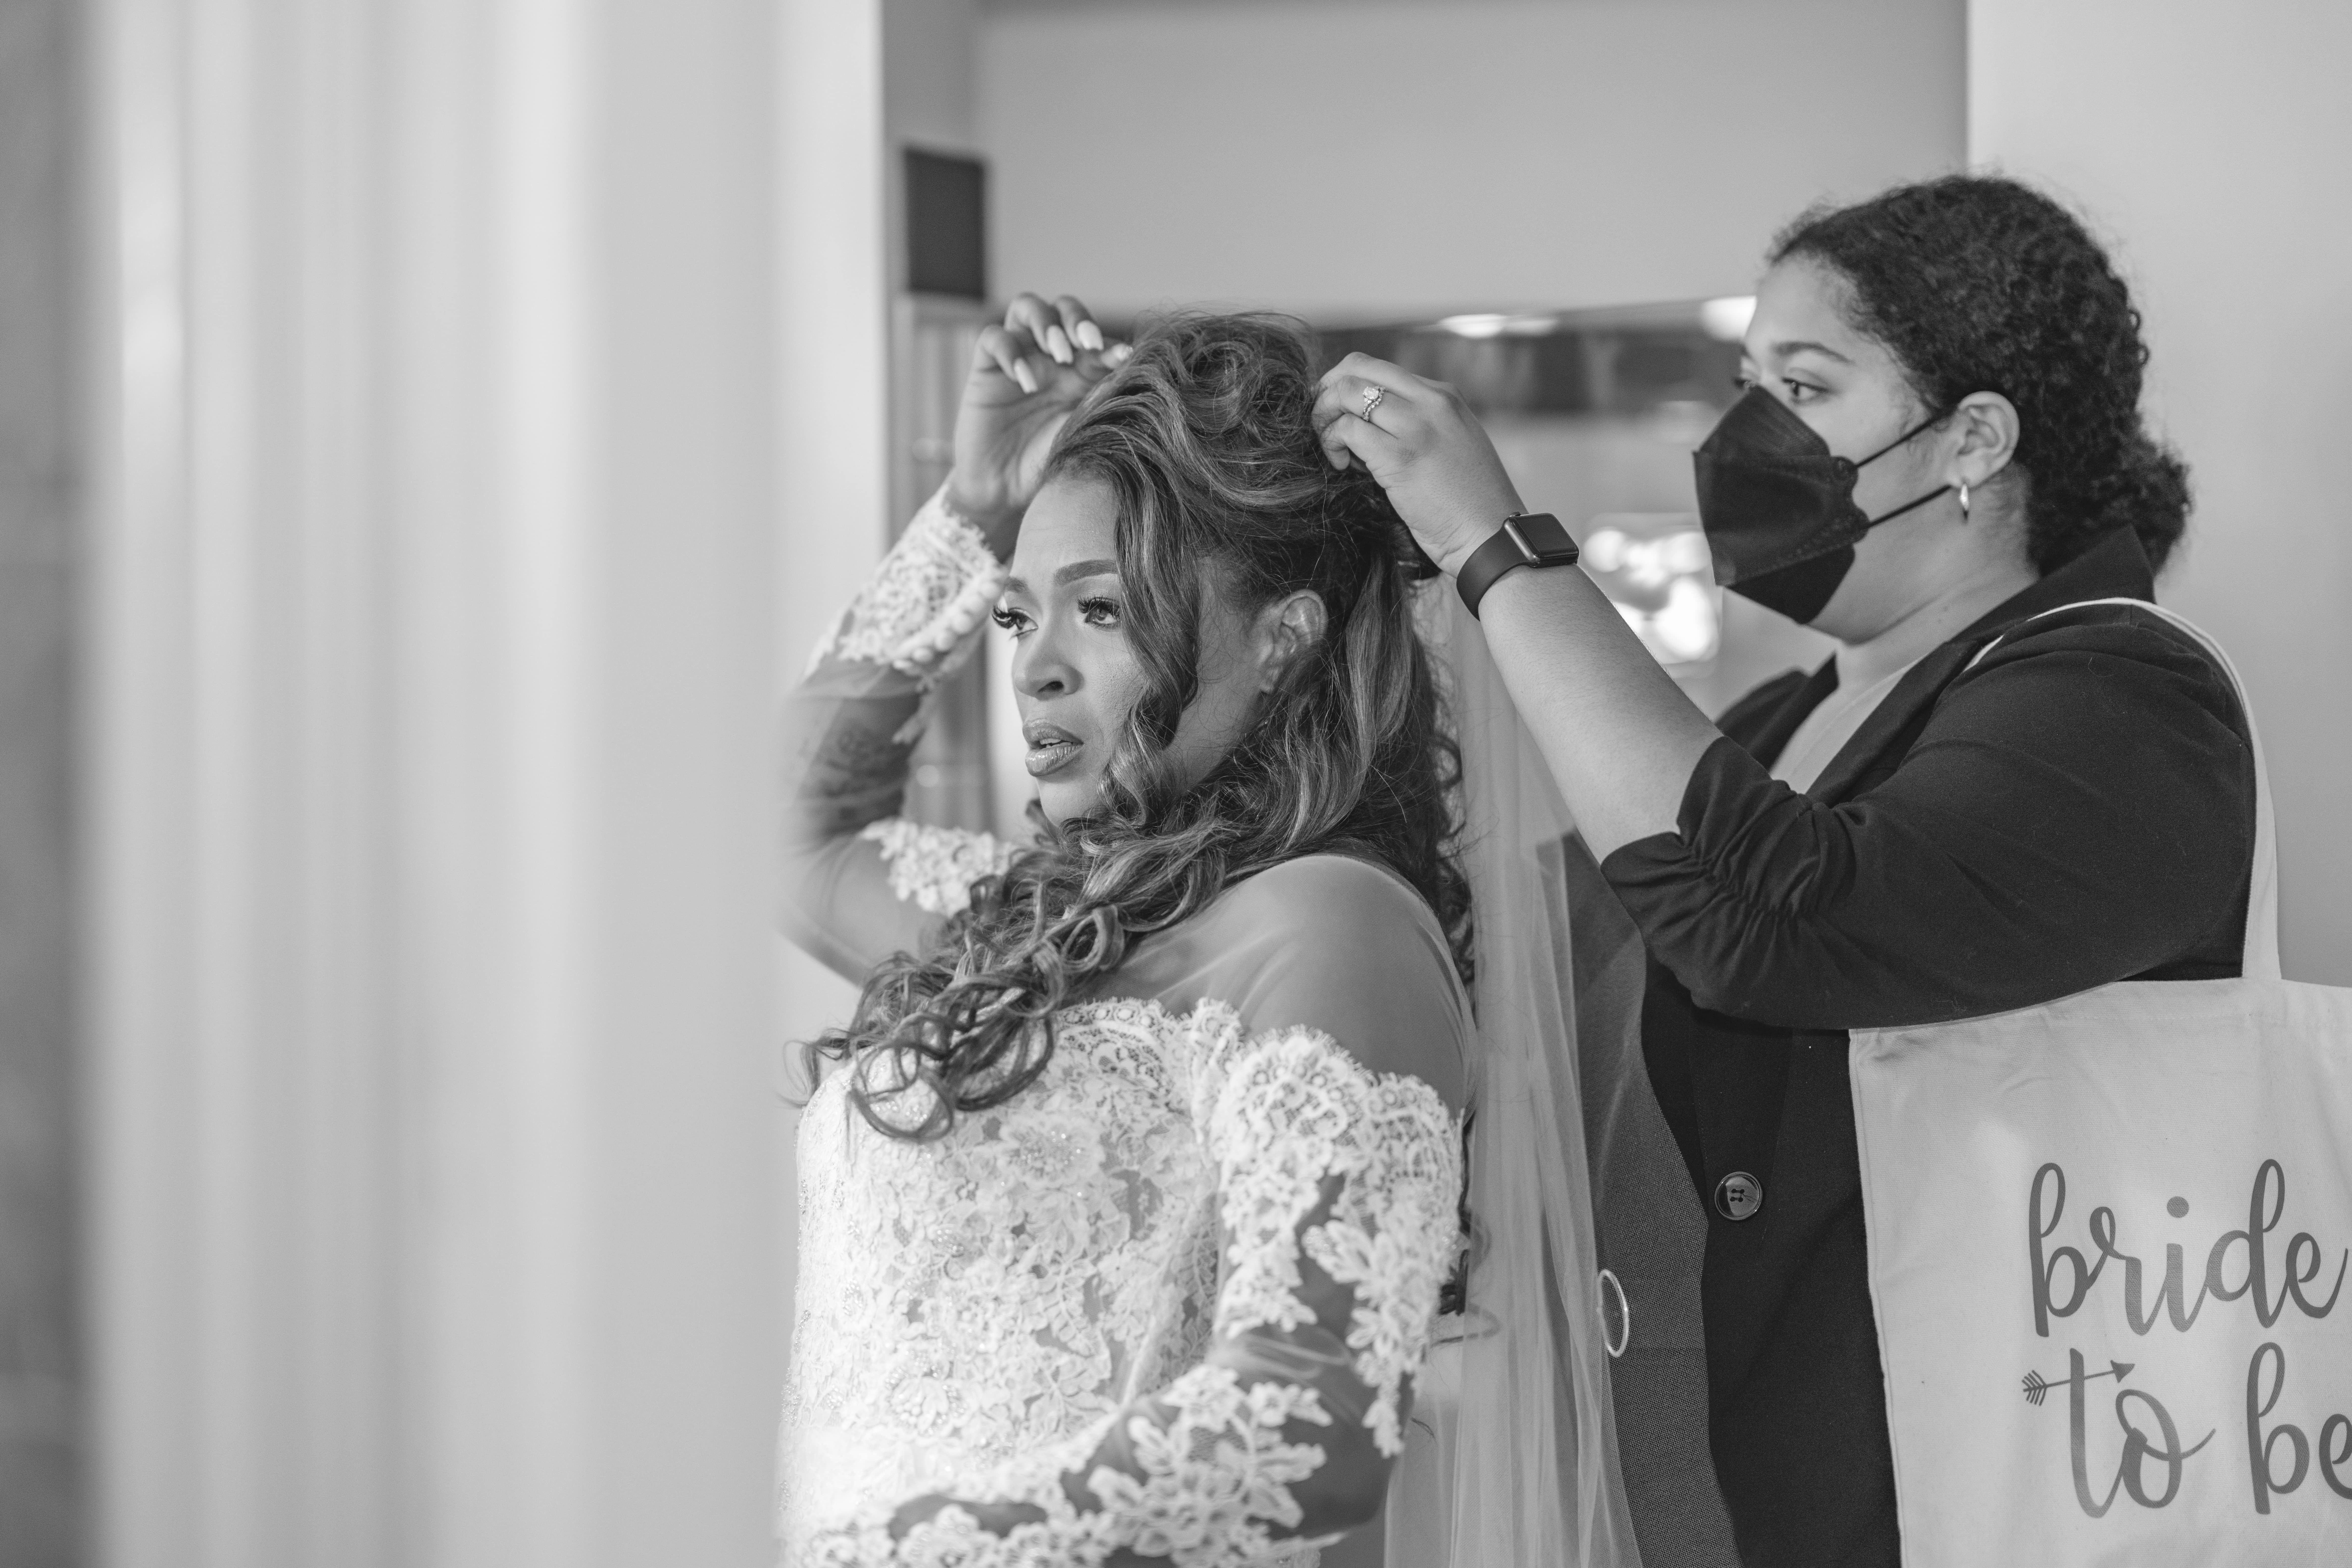 Kansas City wedding planner helping a bride put on her veil